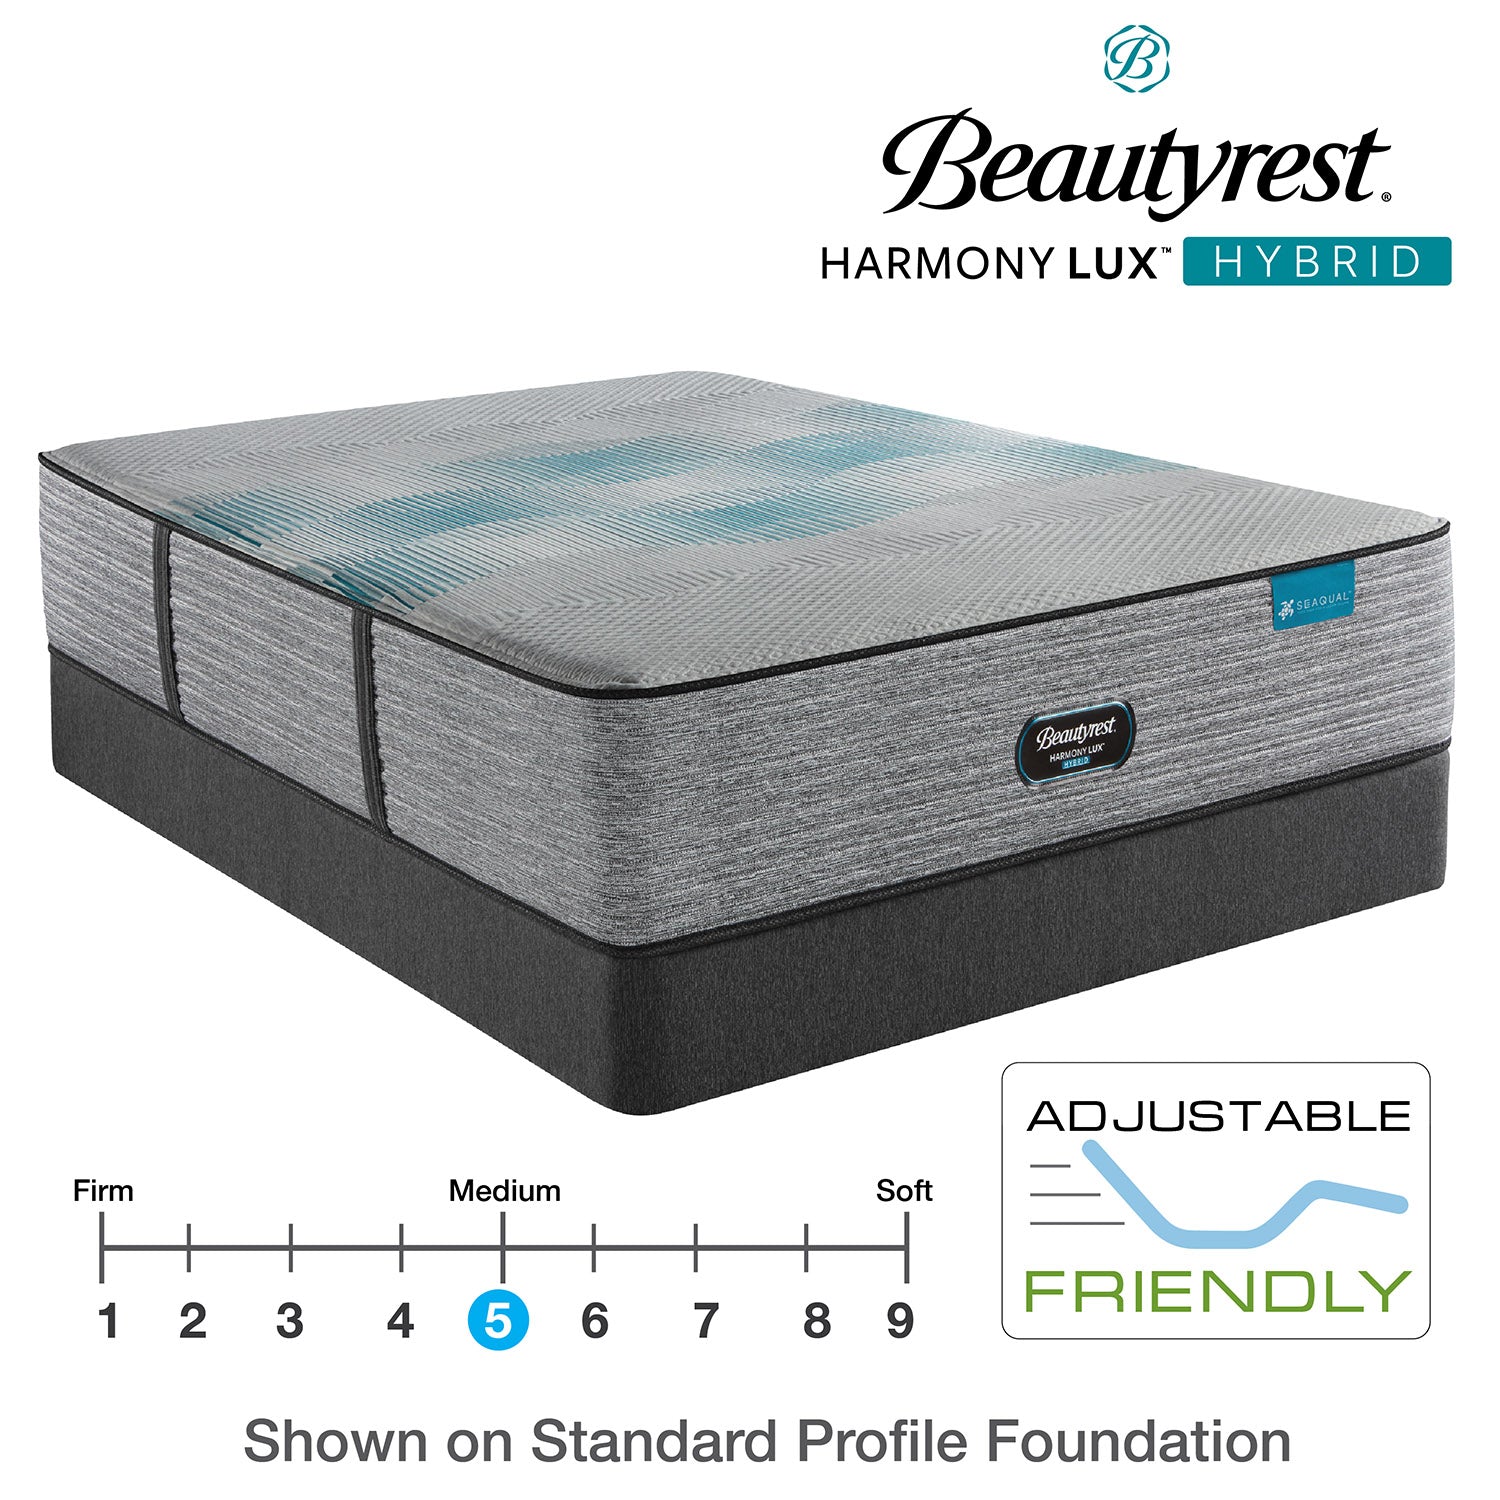 14.5" Beautyrest Harmony Lux Trilliant Hybrid Medium